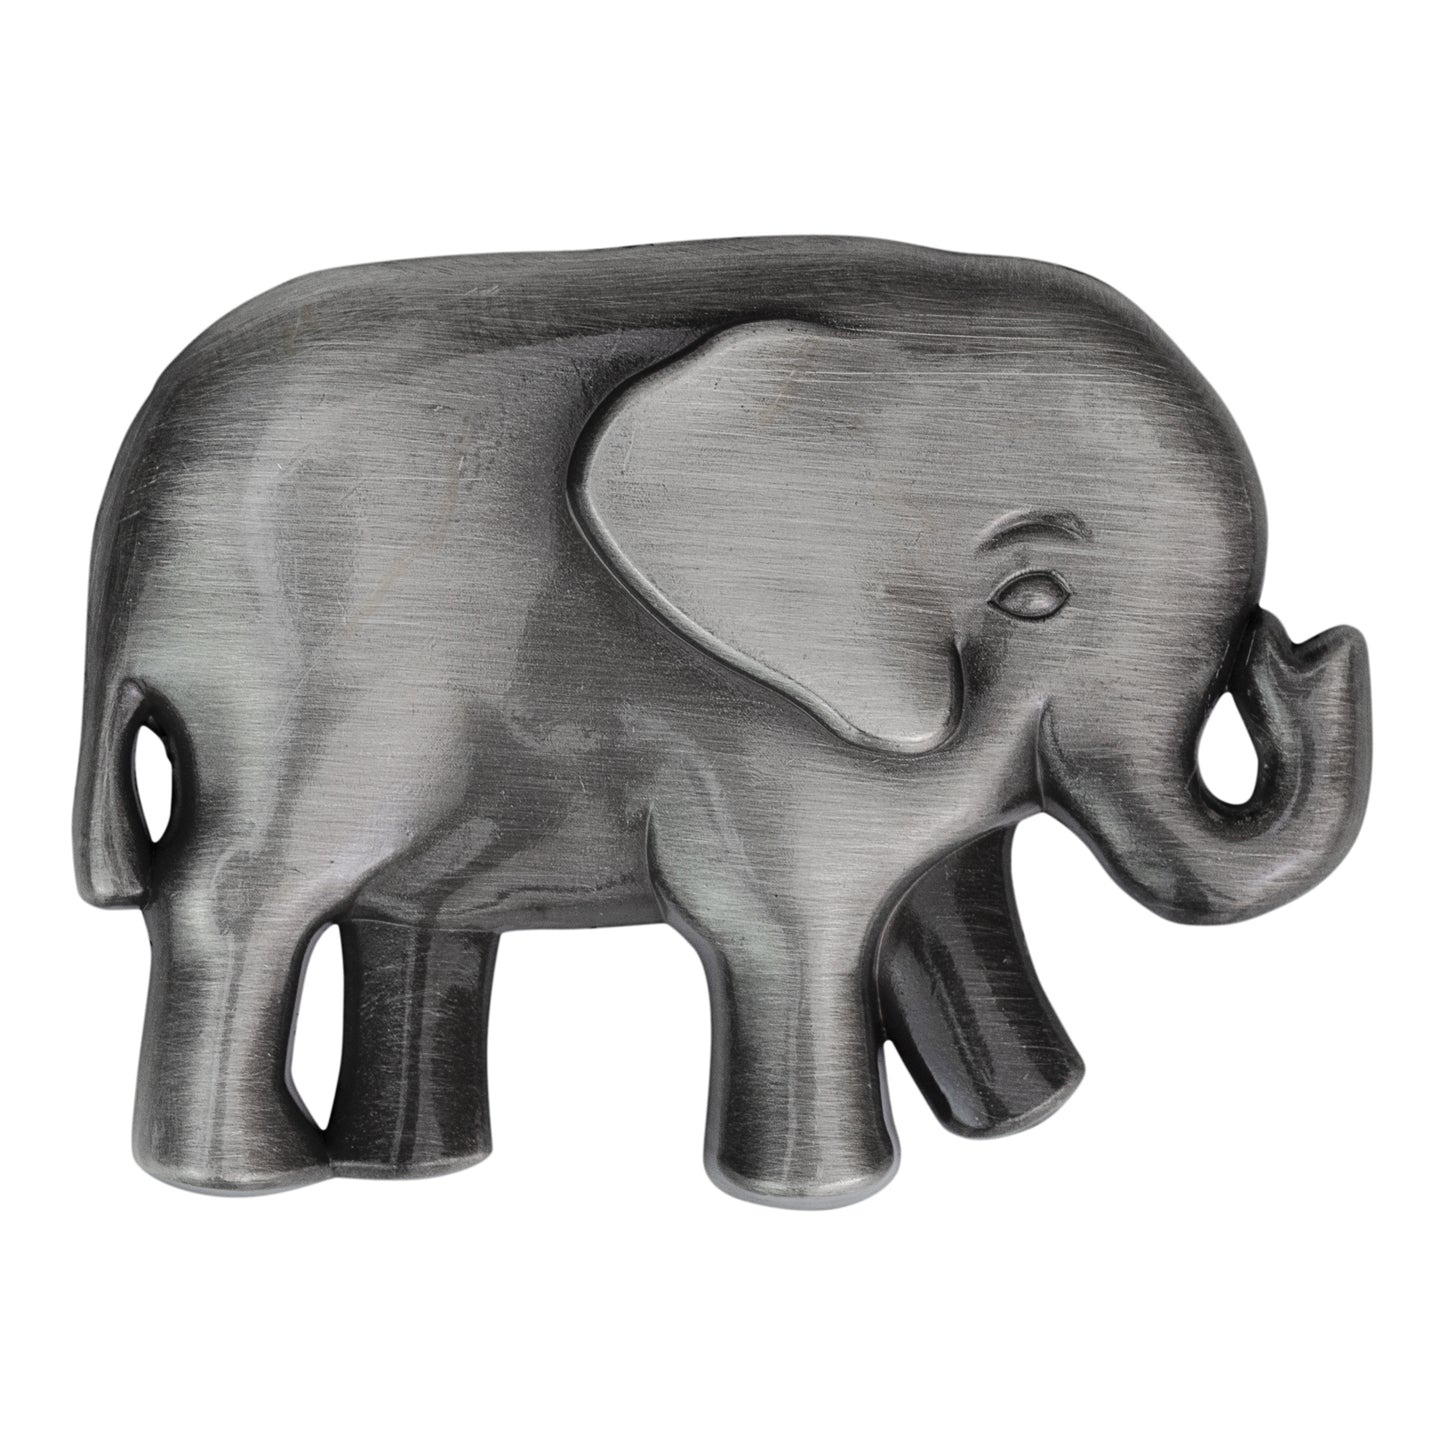 Elephant pocket token